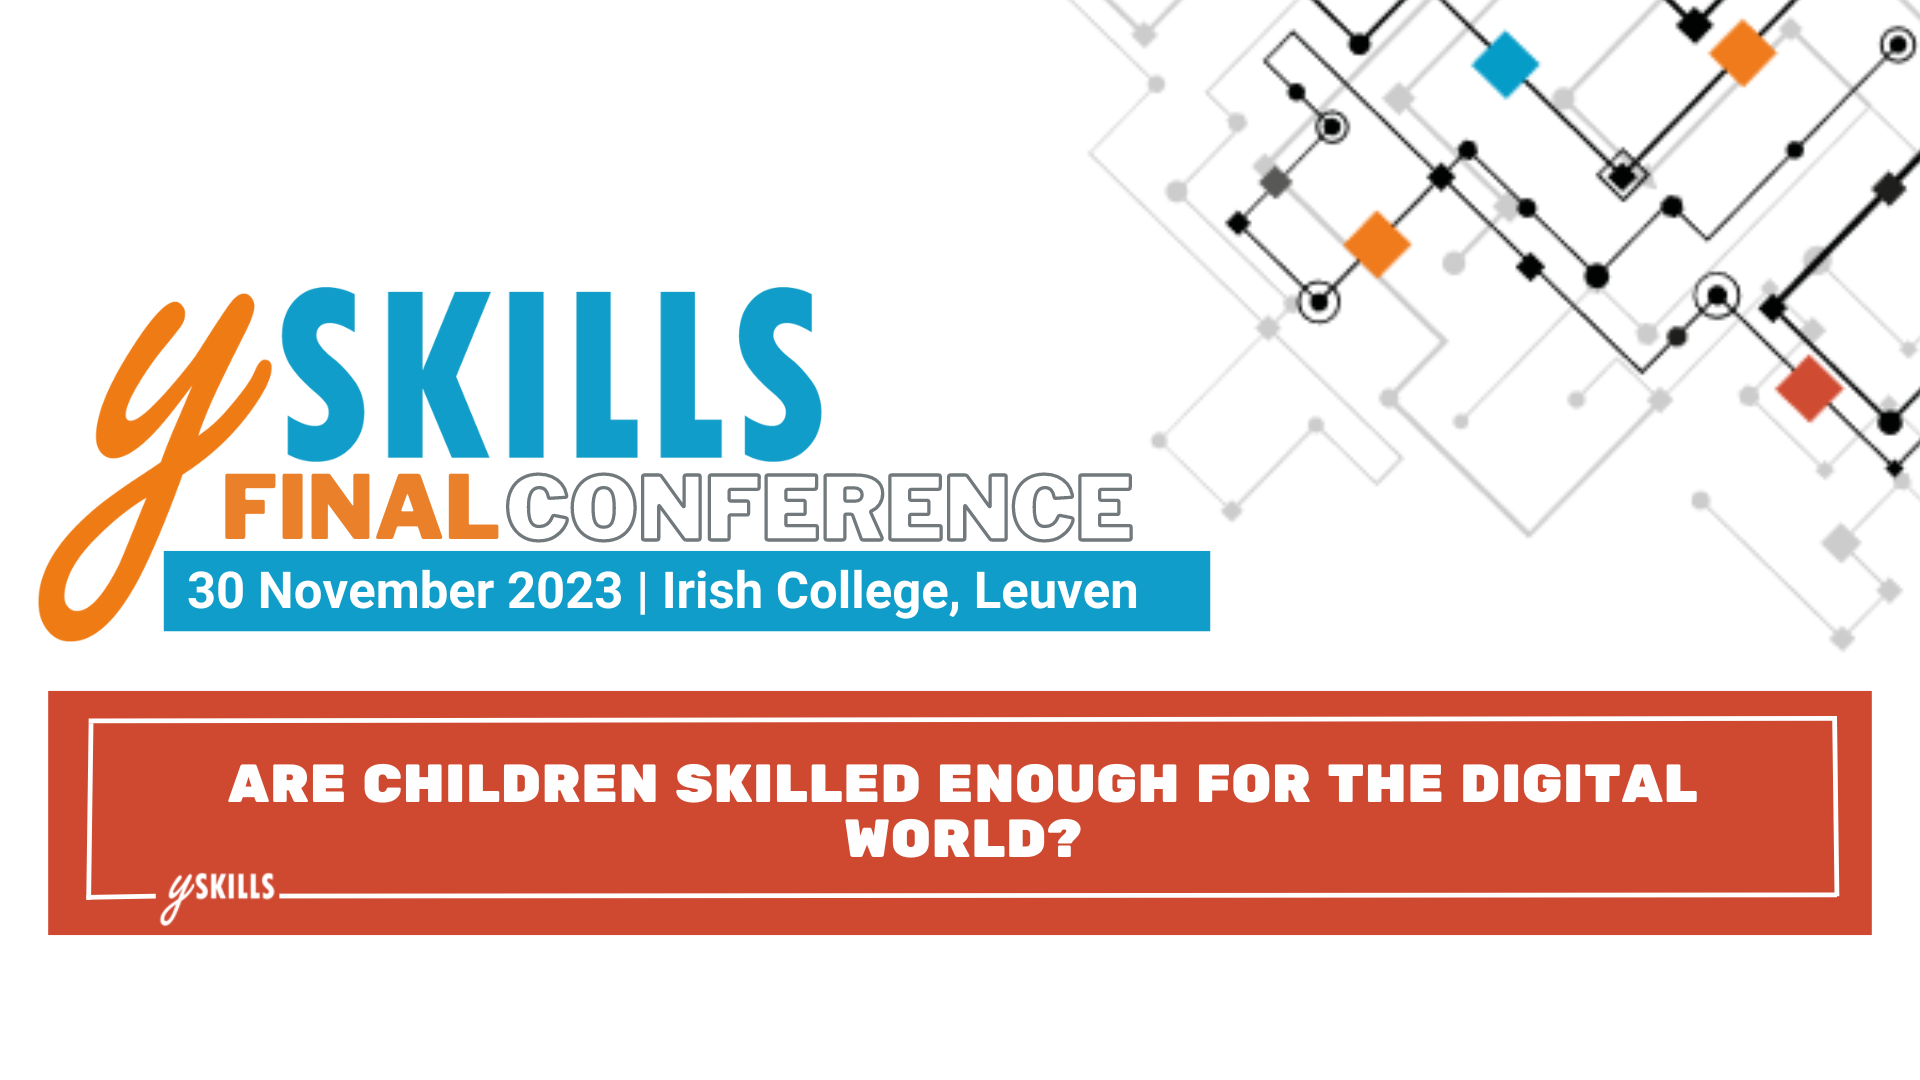 ySKILLS conference banner